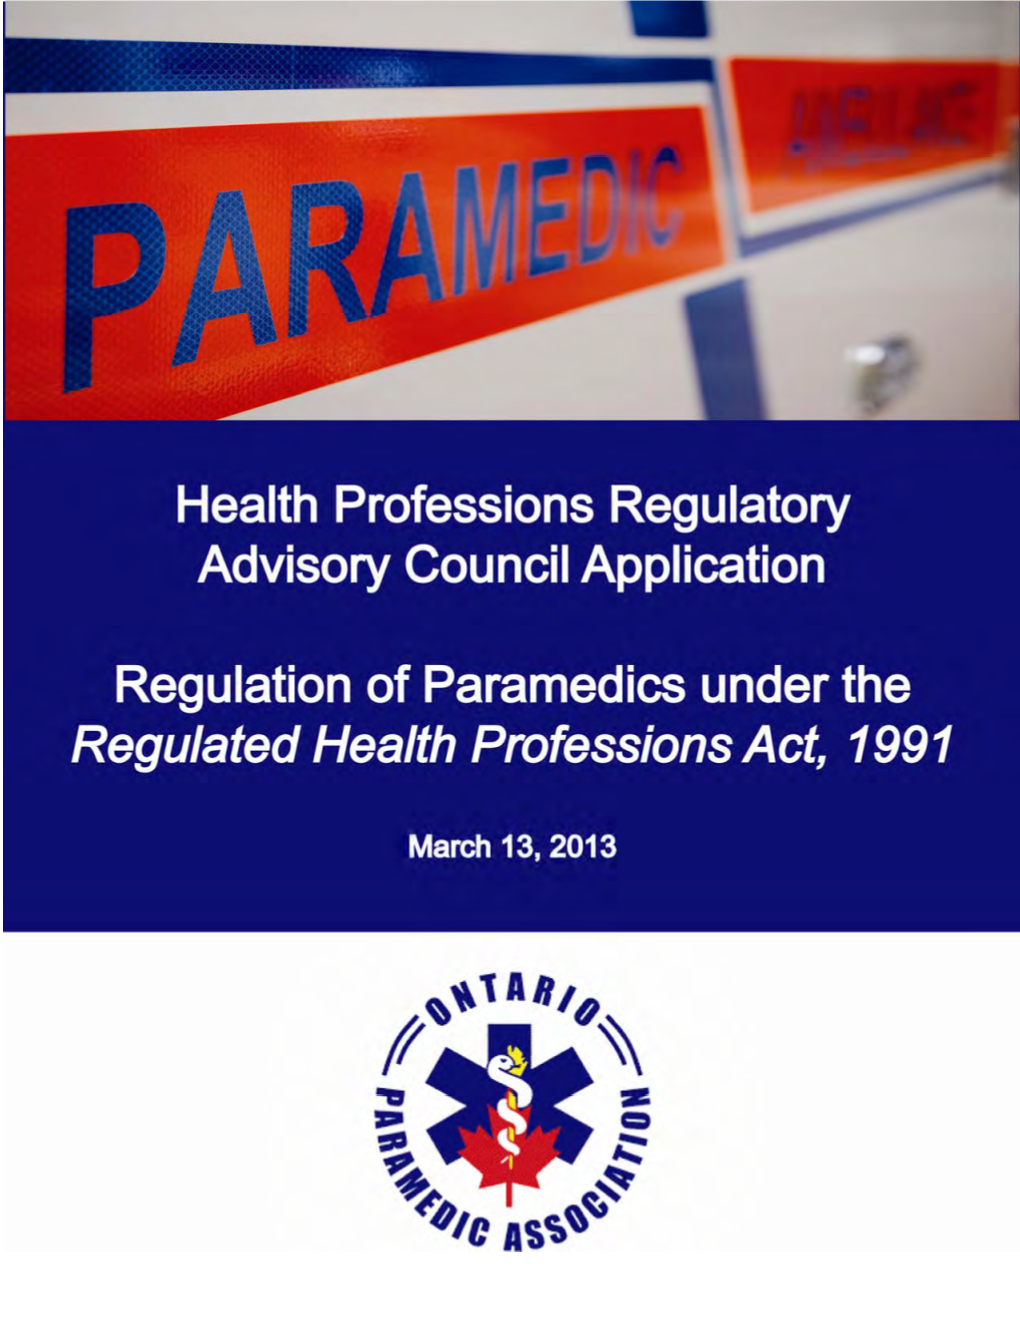 Ontario Paramedic Association Application for Regulation of Paramedics Under the Rhpa, 1991